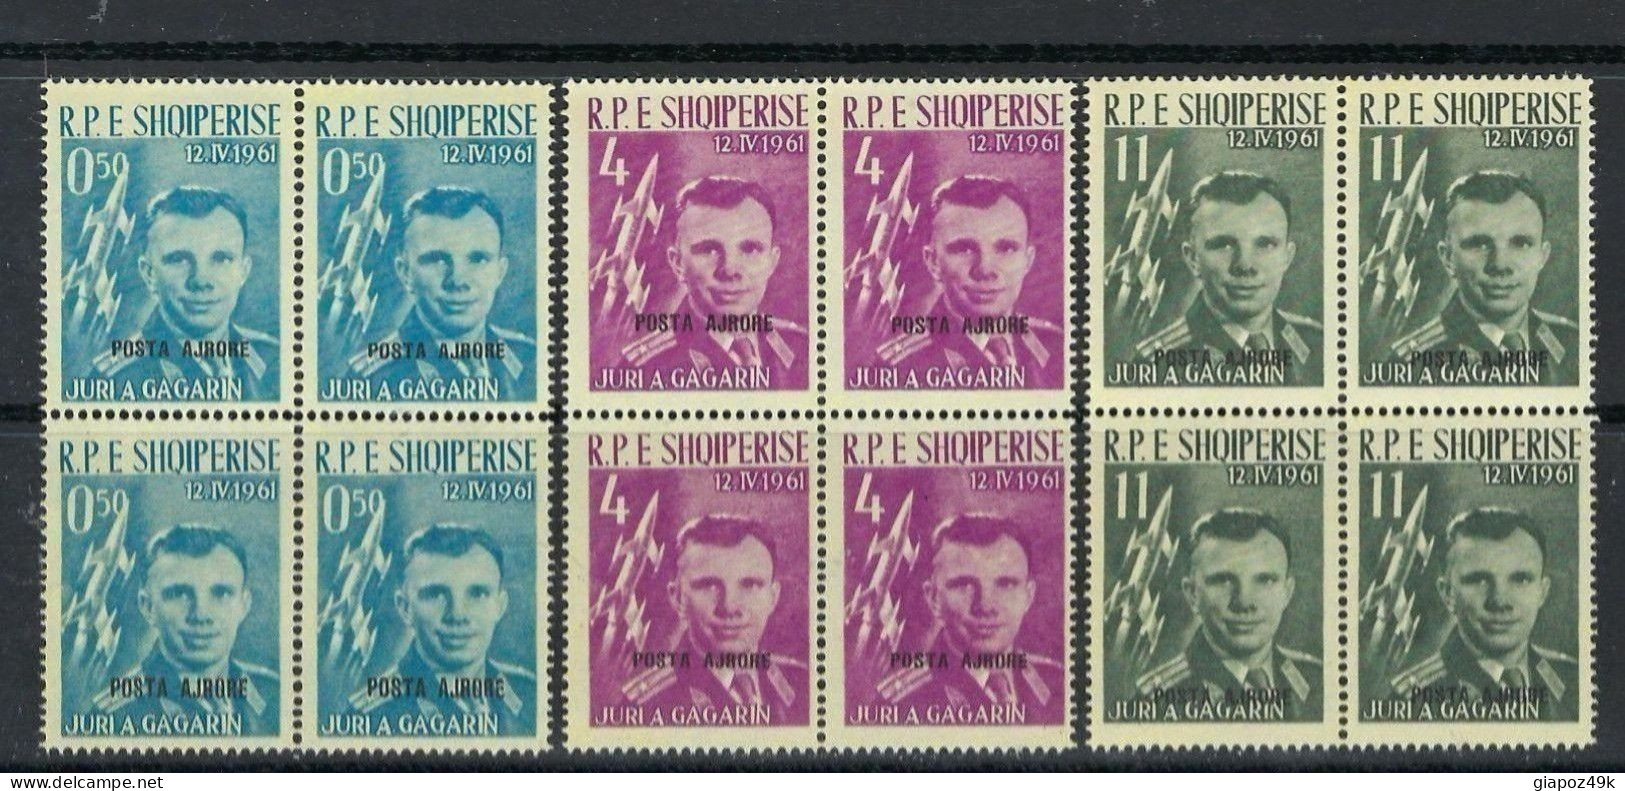 ● ALBANIA 1962 ֍ Wostock 1 ֍ J. Gagarin ● Soprastampati NERO ● P. A. N. A62B / 64B ** X 4 ● Cat. 1200 € ● Lotto N. 330 ● - Albanie